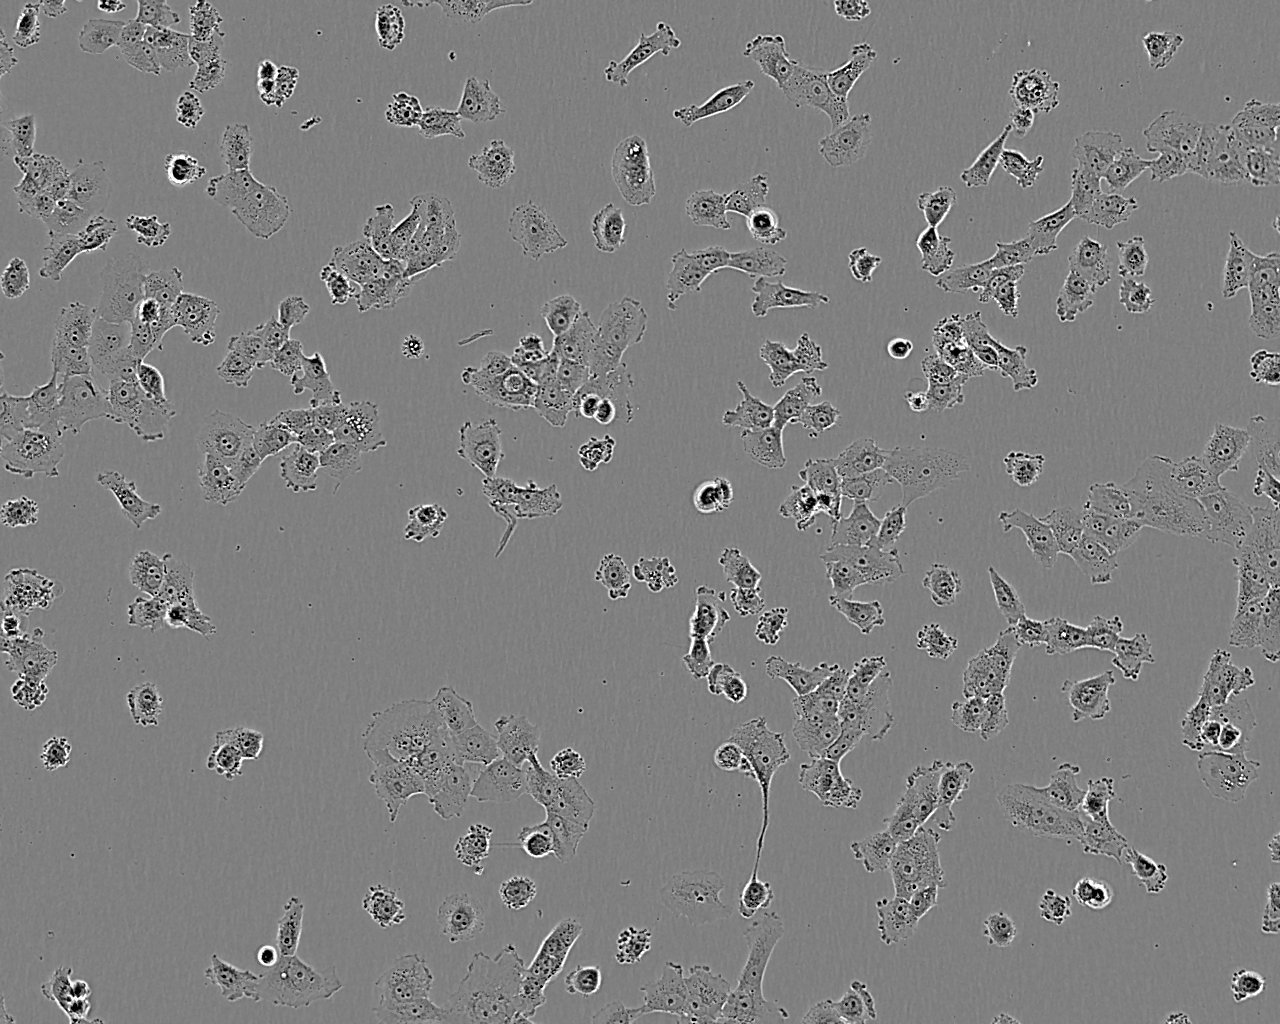 KNS-81 epithelioid cells人神经胶质瘤细胞系,KNS-81 epithelioid cells